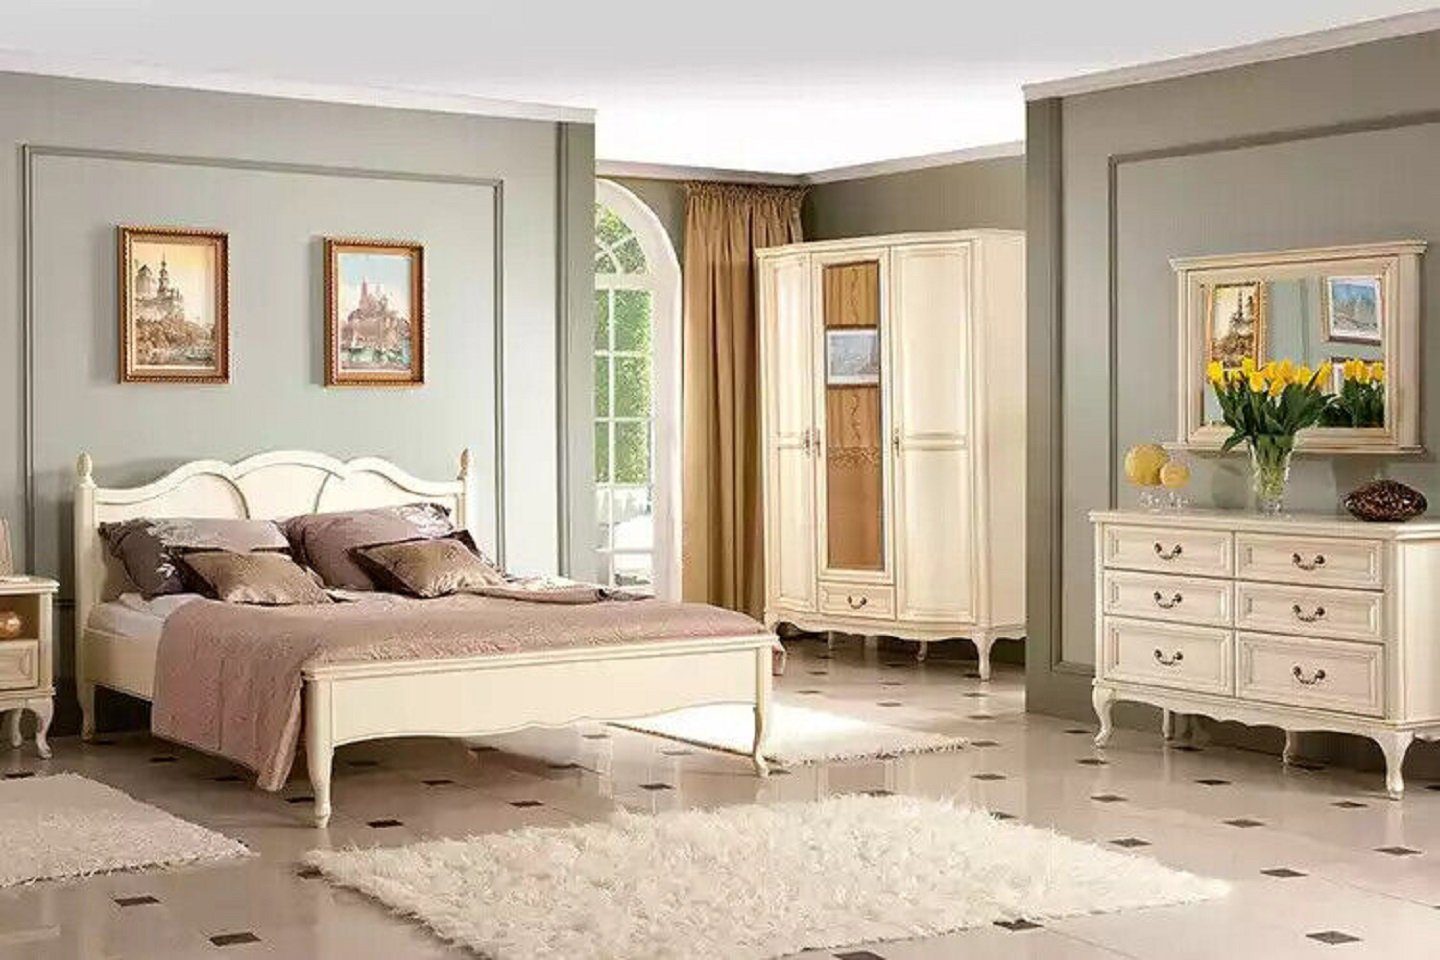 JVmoebel Bett Klassisch Bett Holz Bett), (1-tlg., Europe Betten in 160x200 Nur Polster Beige Schlafzimmer Design Made Möbel